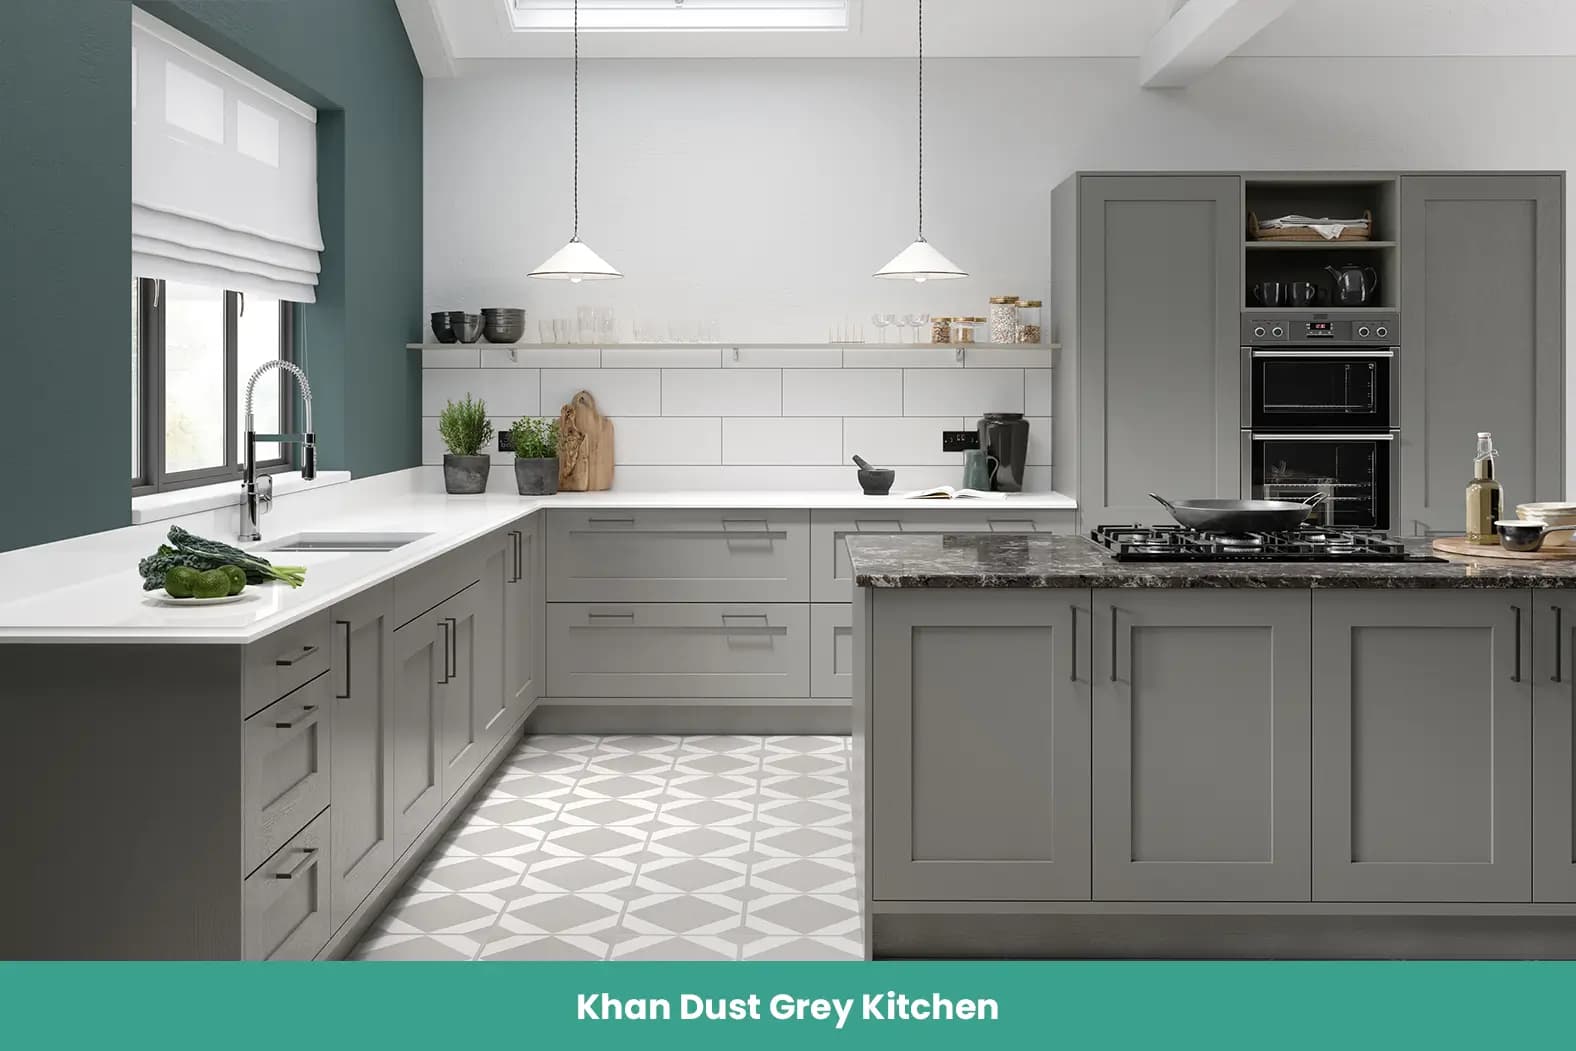 Khan Dust Grey Kitchen